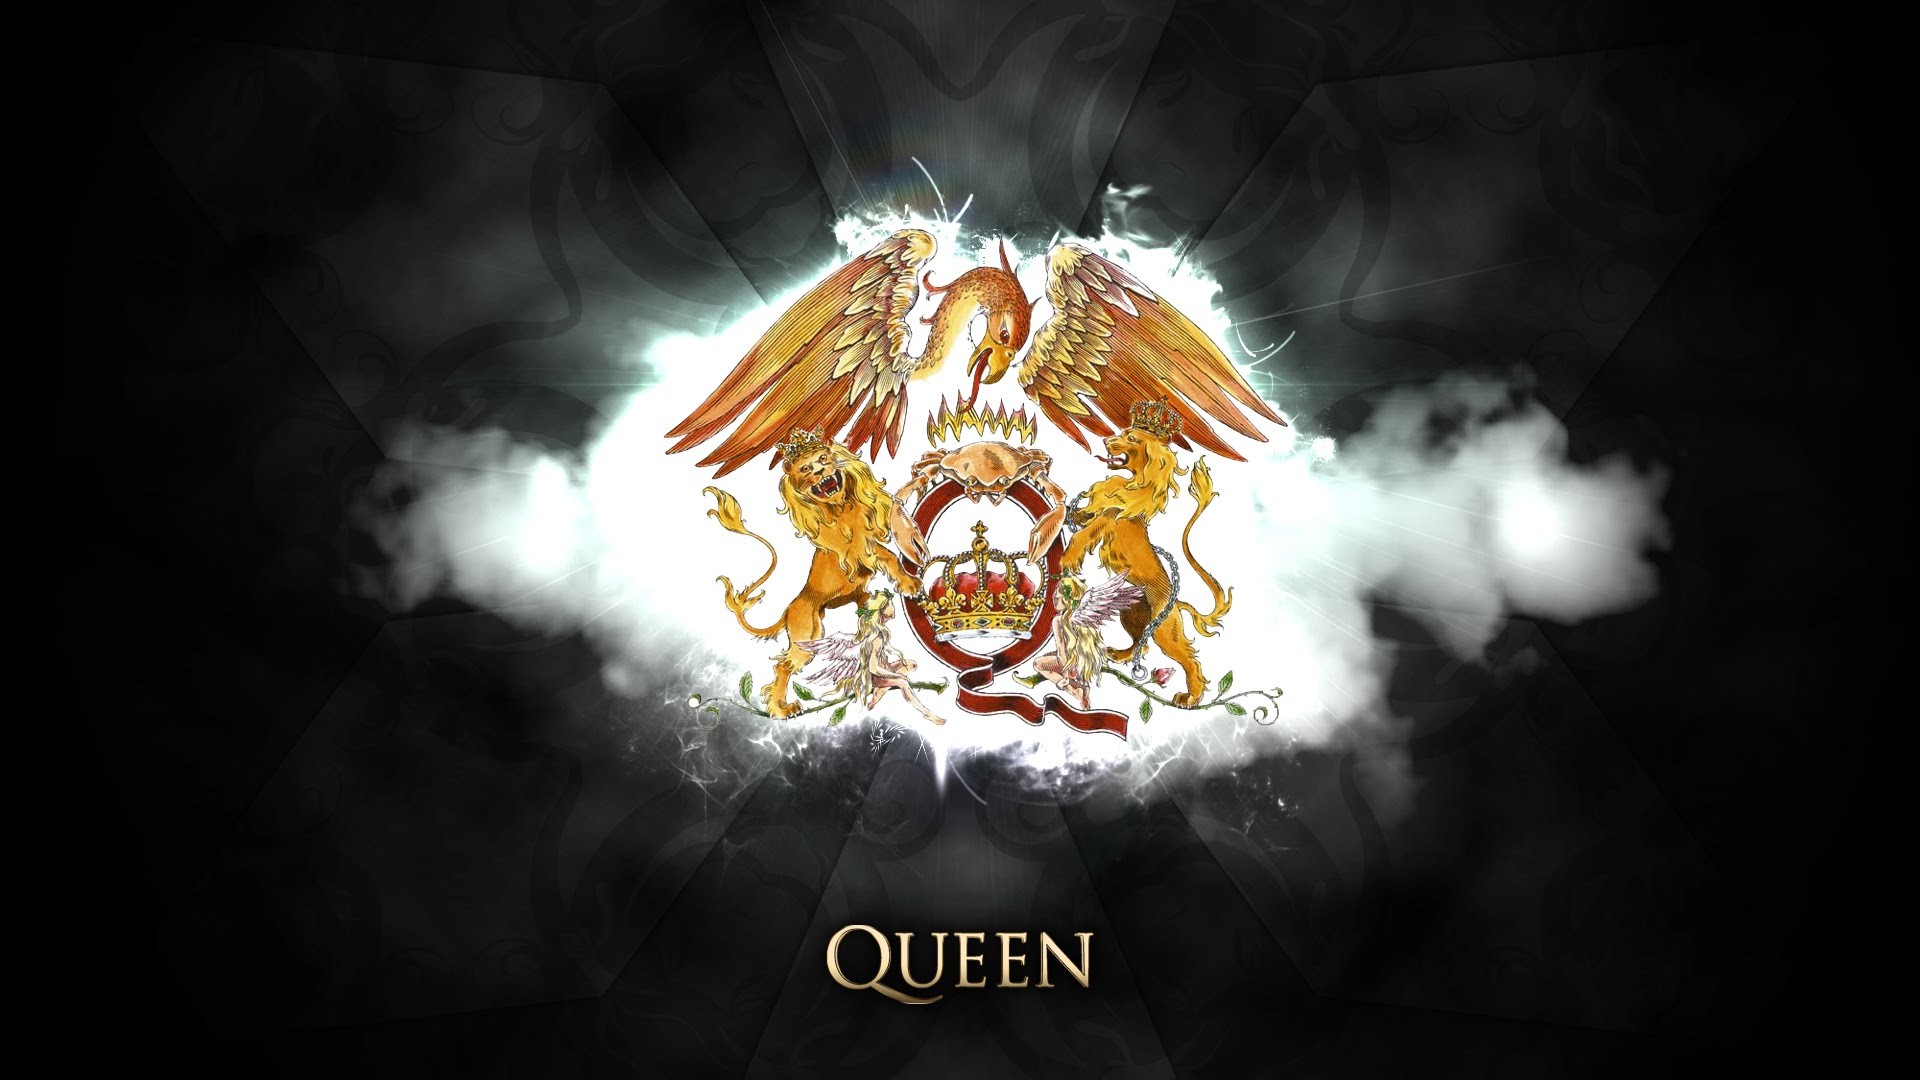 queen logo wallpaper,graphic design,font,illustration,logo,graphics